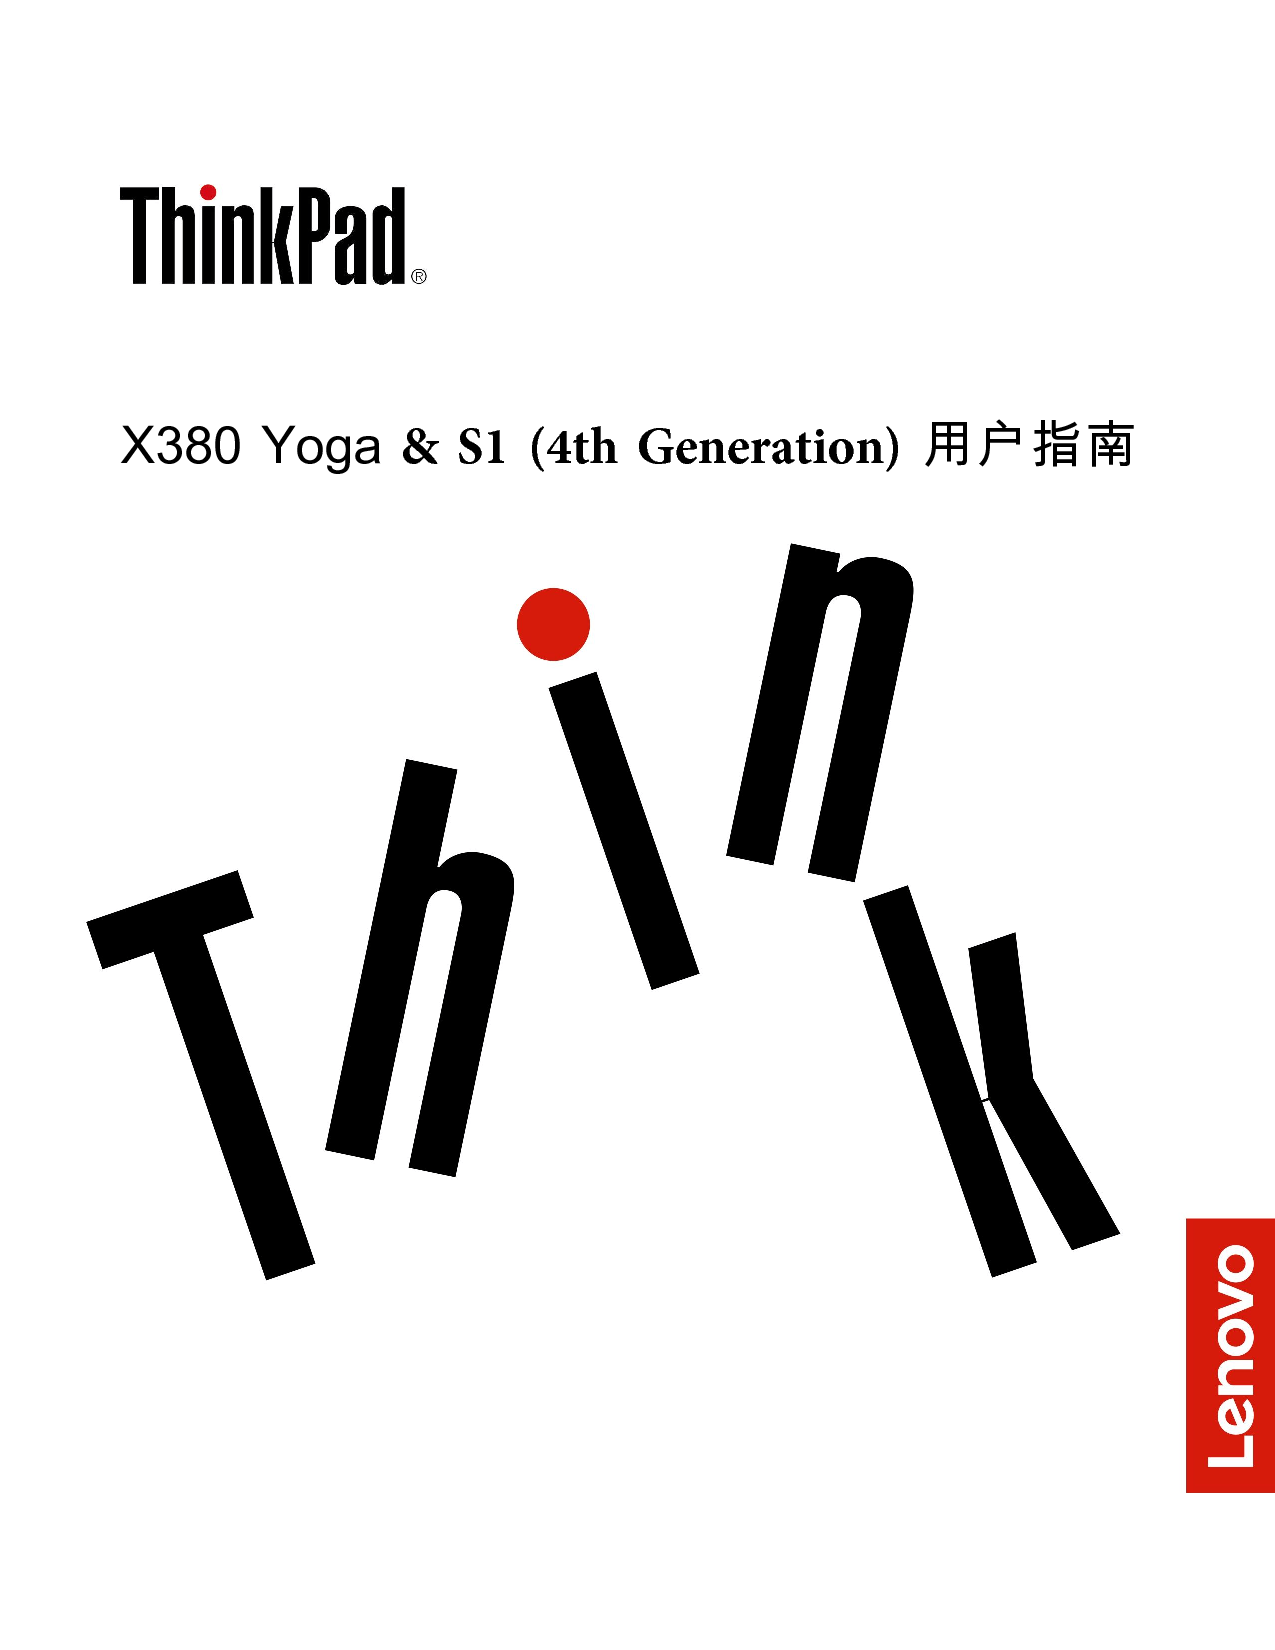 联想 Lenovo Thinkpad S1 第四代, Thinkpad X380 Yoga 第三版 用户指南 封面